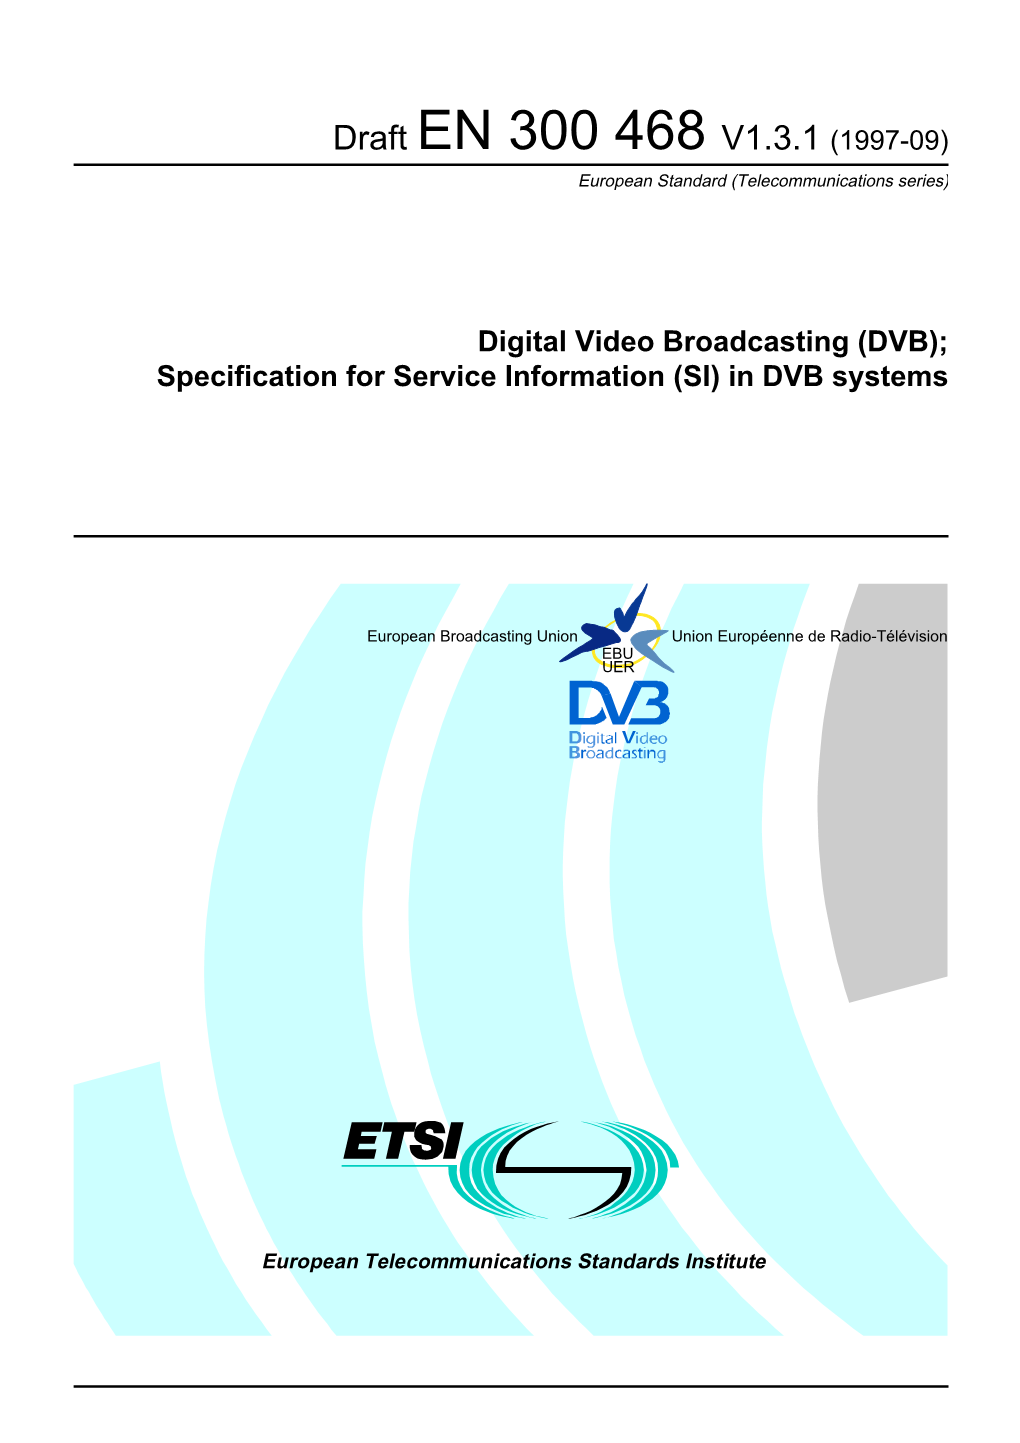 EN 300 468 V1.3.1 (1997-09) European Standard (Telecommunications Series)